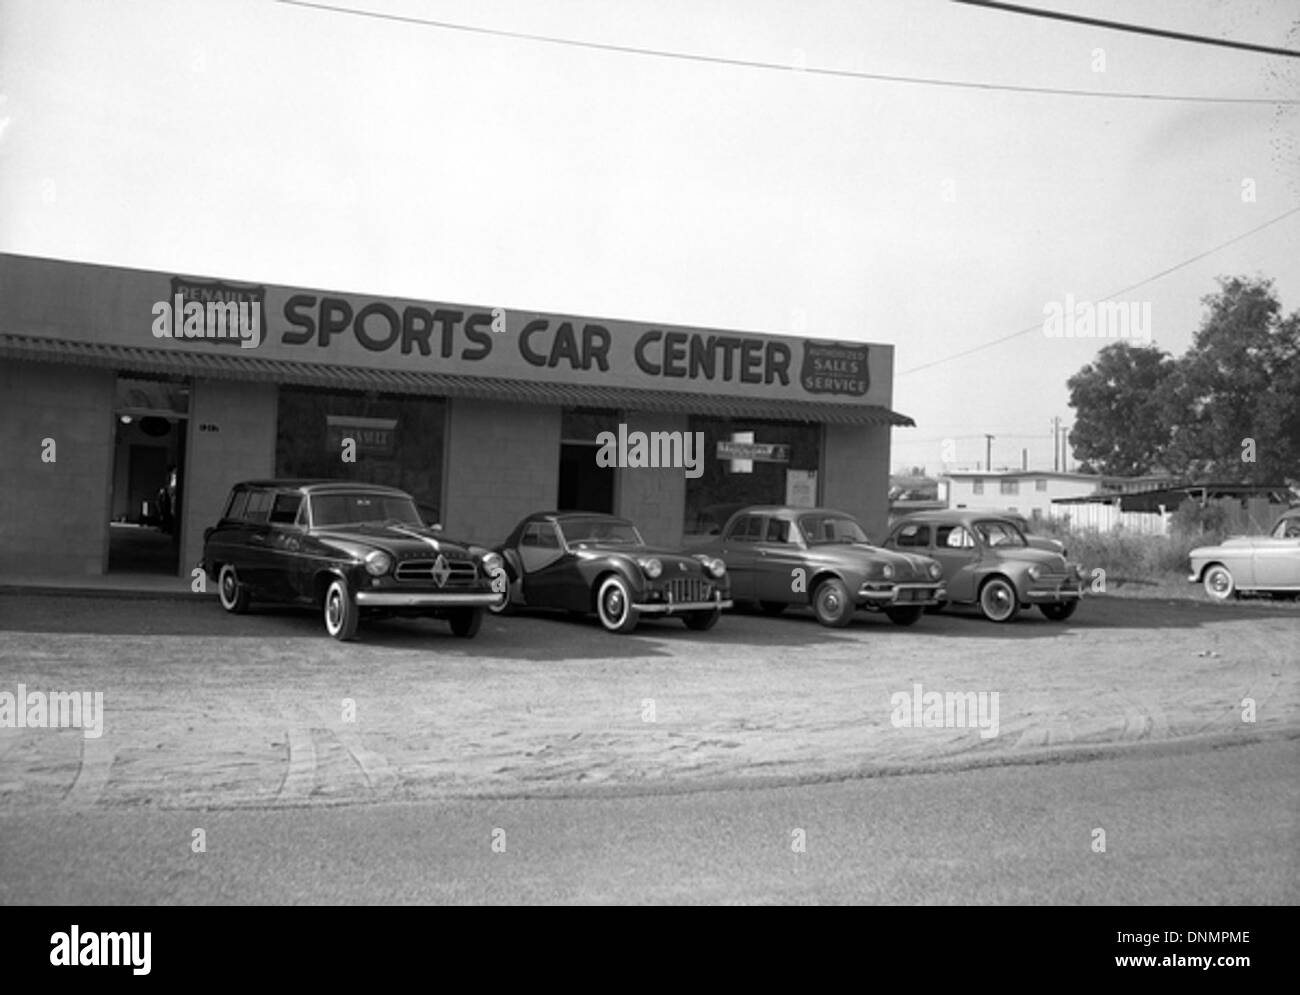 https://c8.alamy.com/comp/DNMPME/sports-car-center-dealership-in-tallahassee-florida-DNMPME.jpg